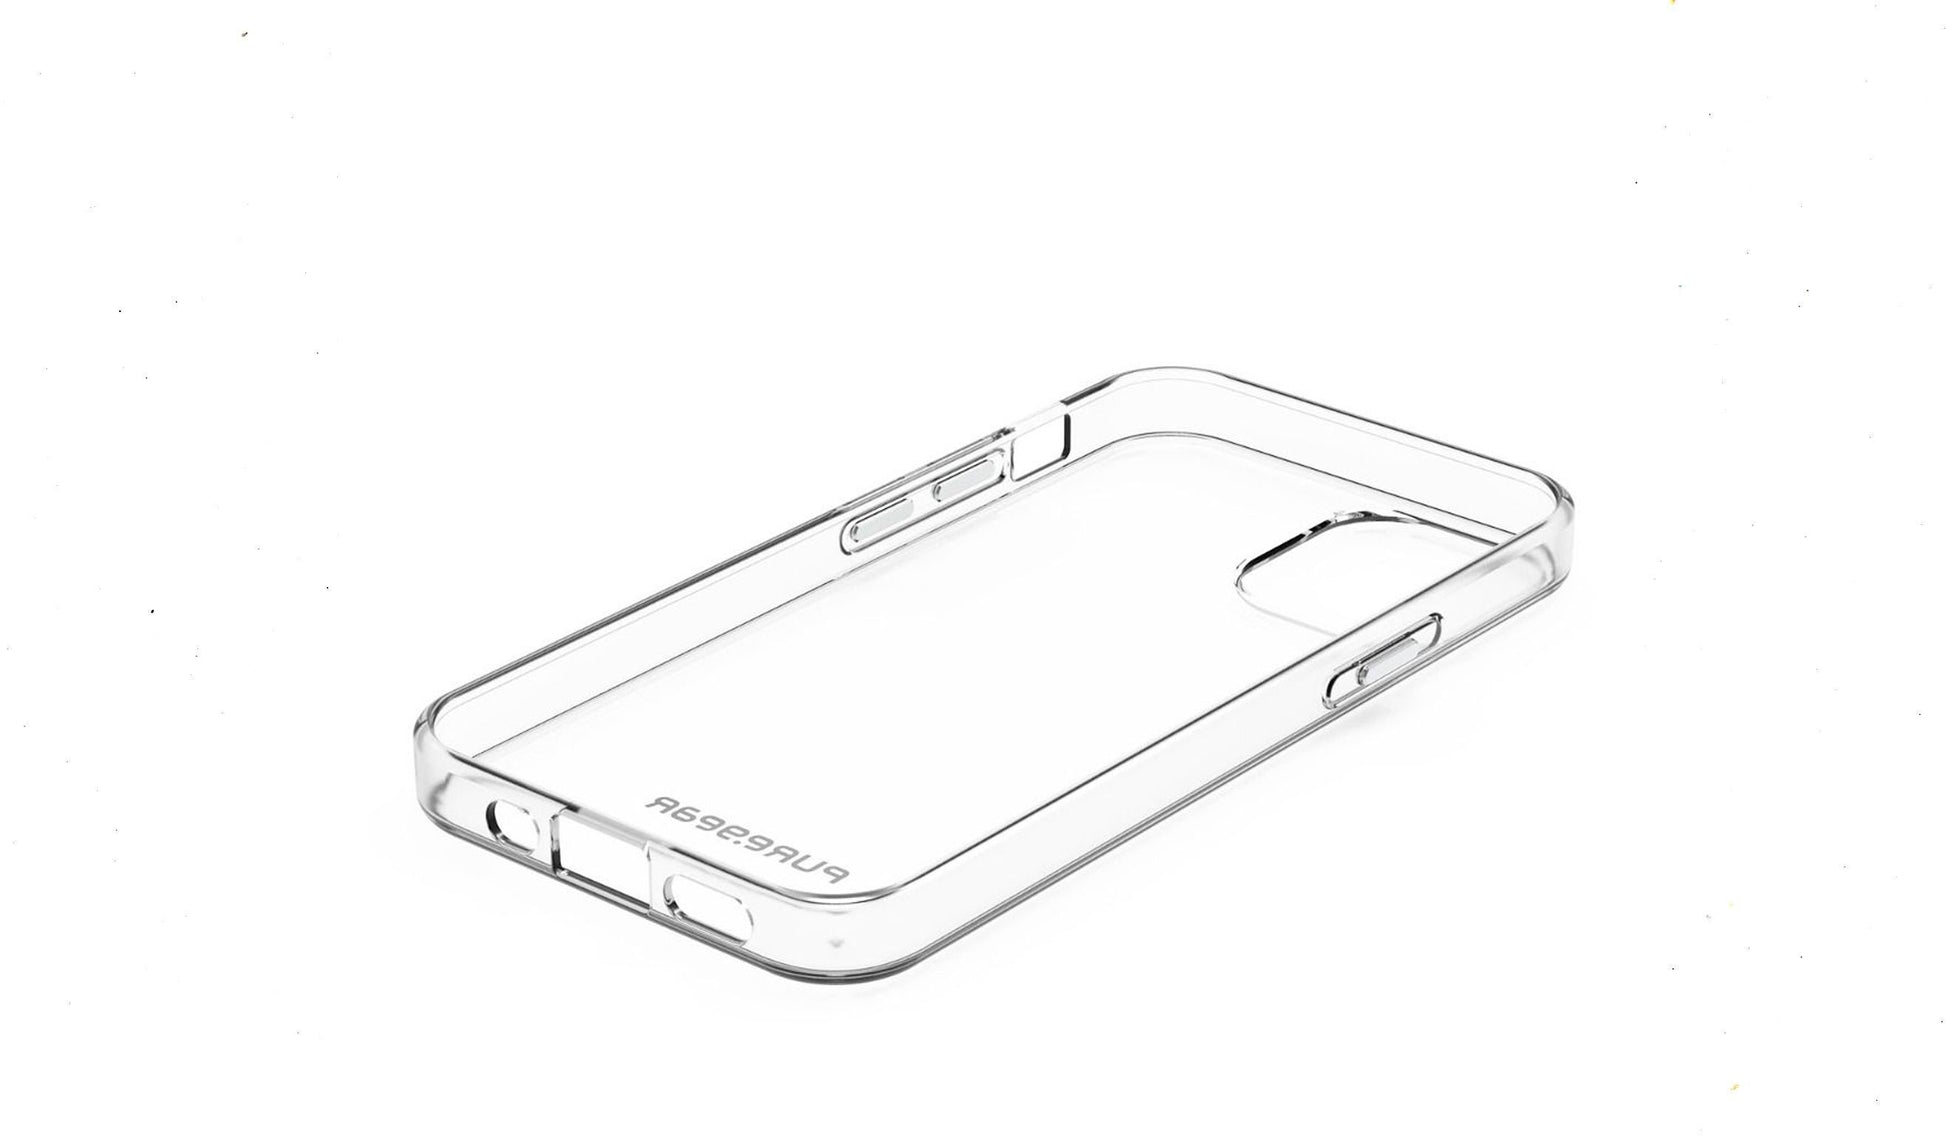 Estuche  para iPhone 12 mini - Transparente - PureGear freeshipping - iStore Costa Rica